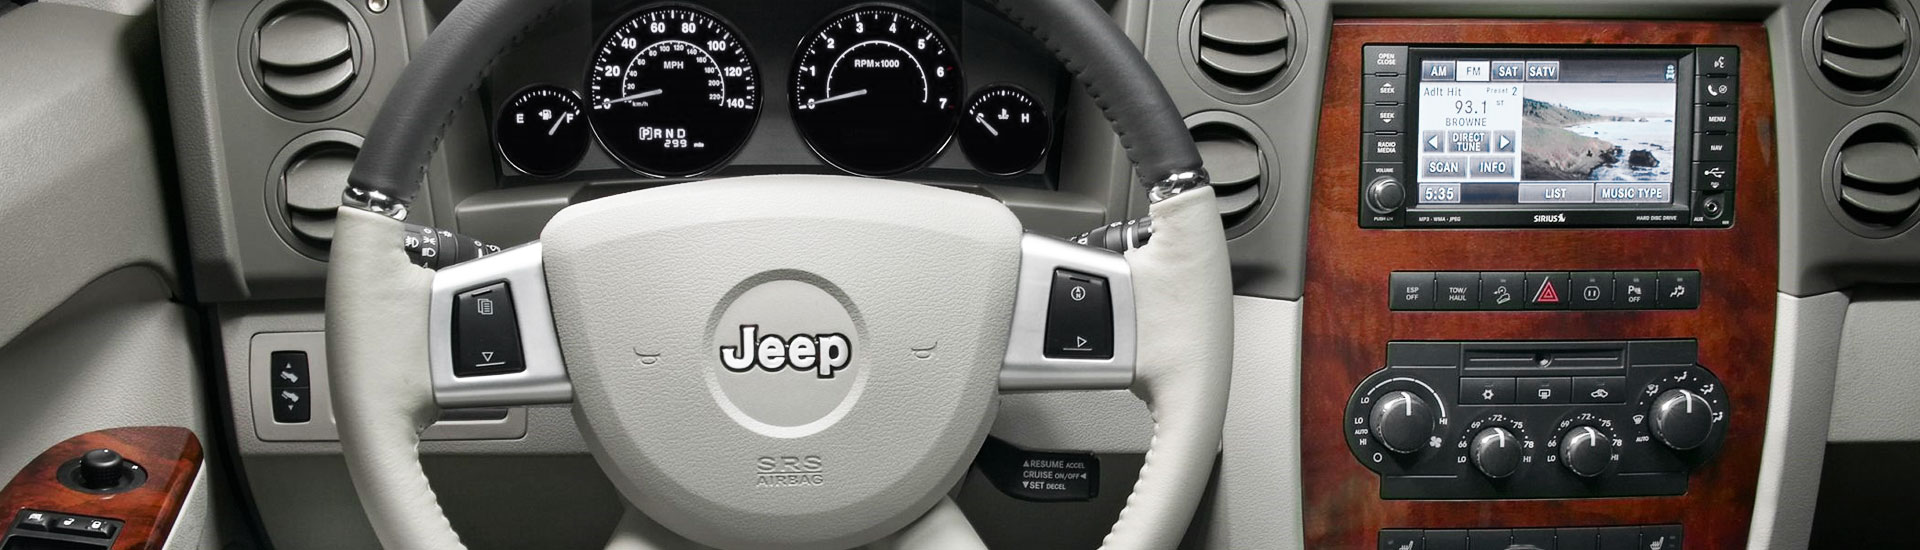 2021 Jeep Cherokee Custom Dash Kits